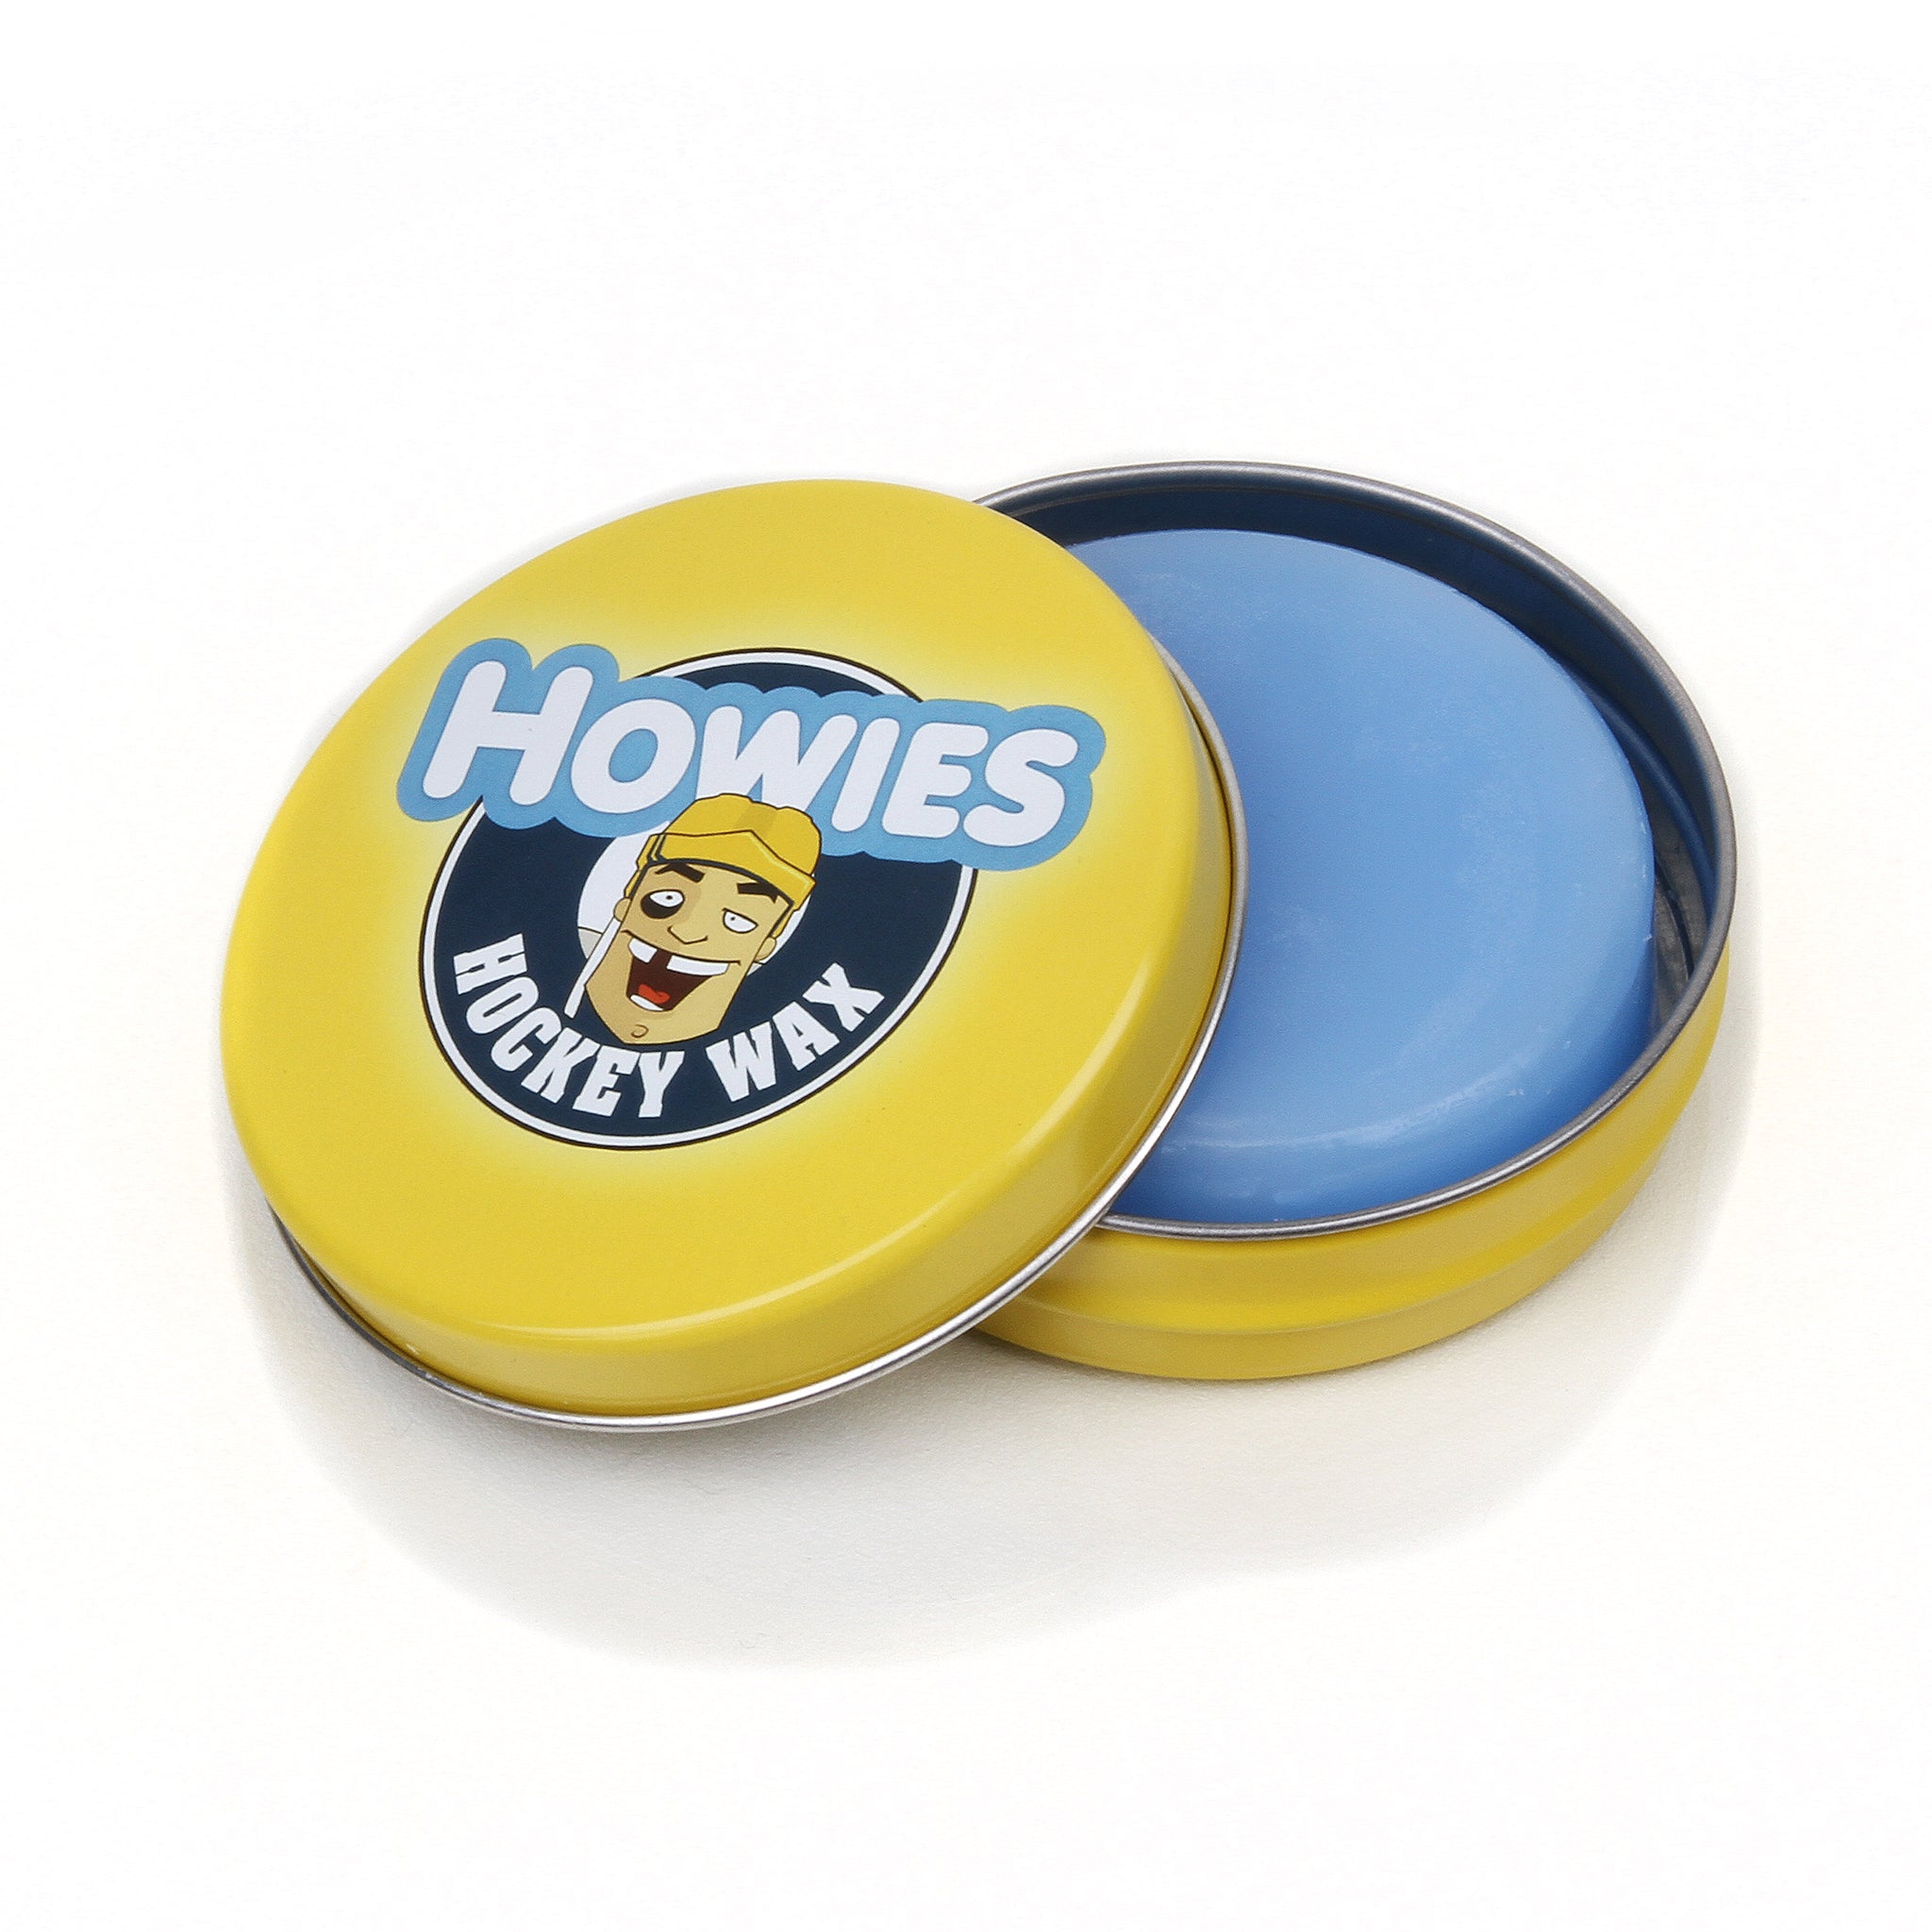 Howies Bulk Wax 12-Pack